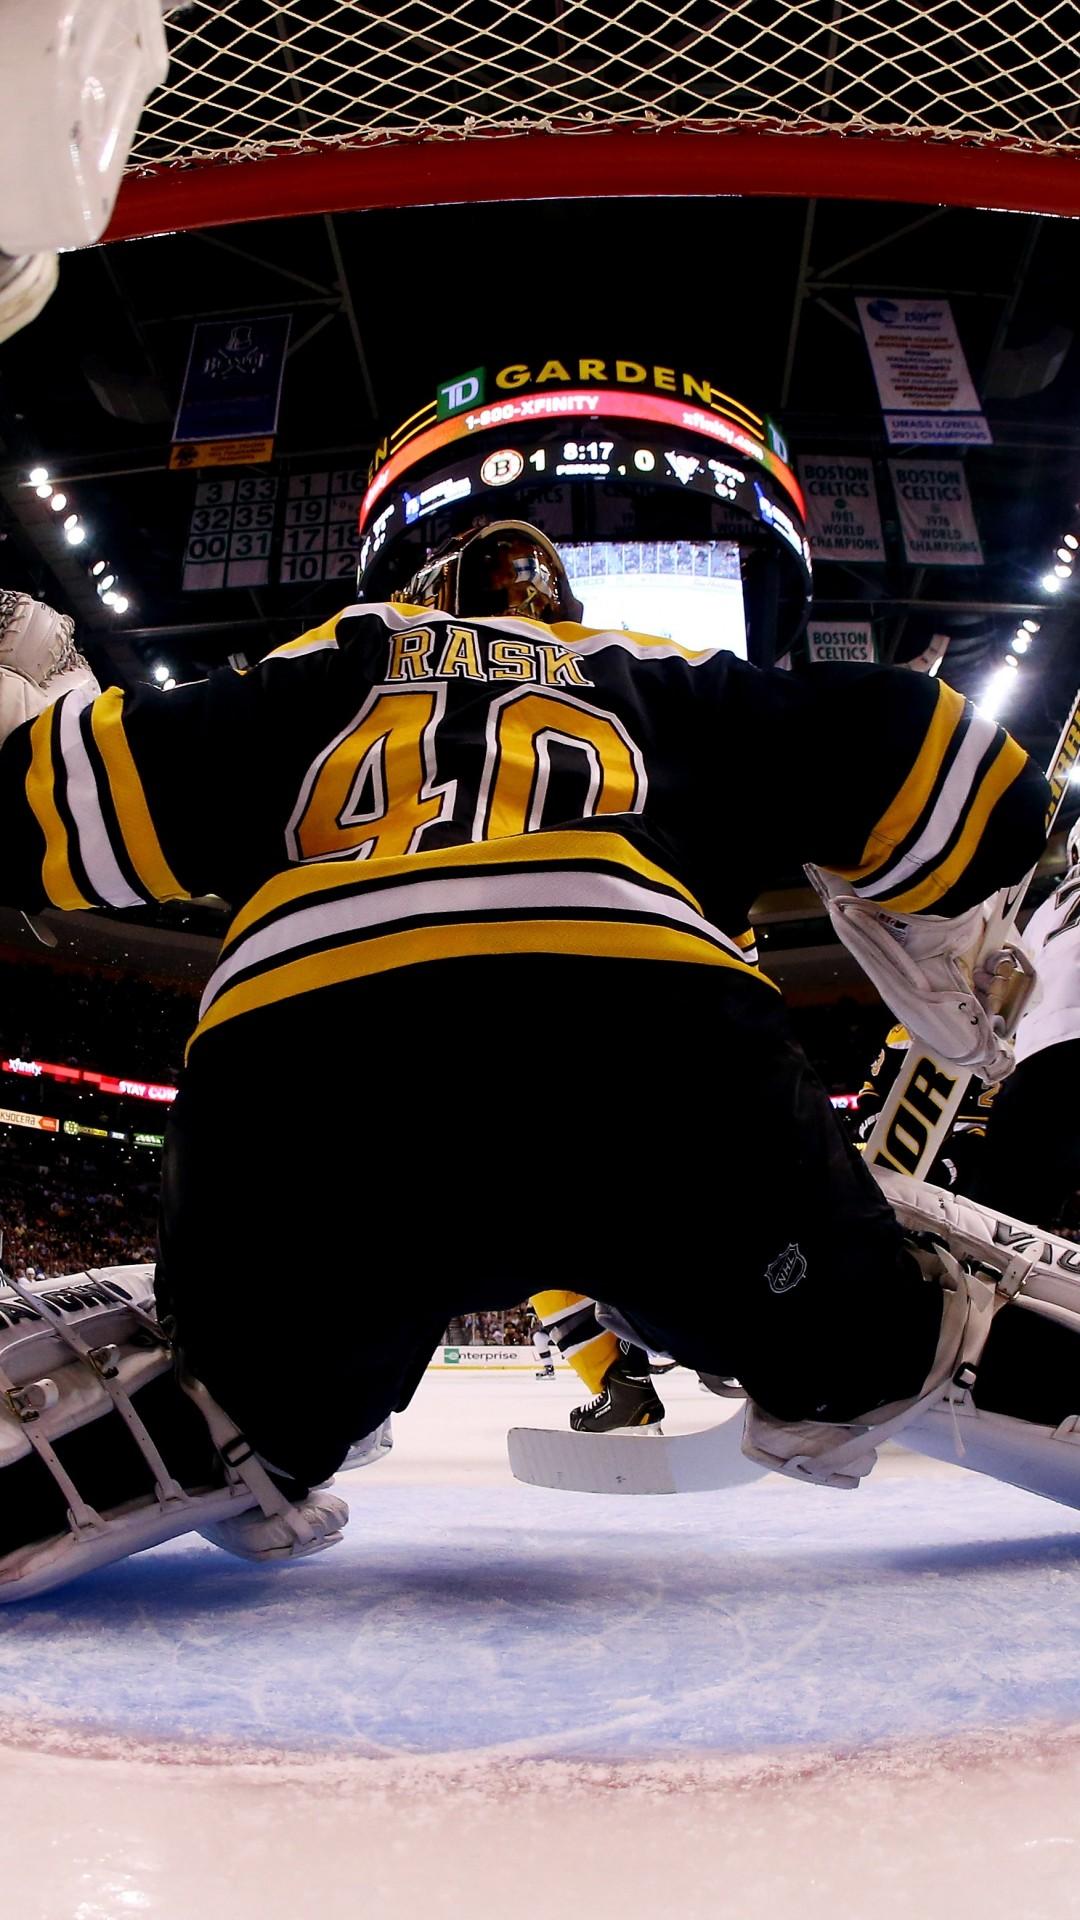 Boston Bruins IPhone Wallpaper 69 images